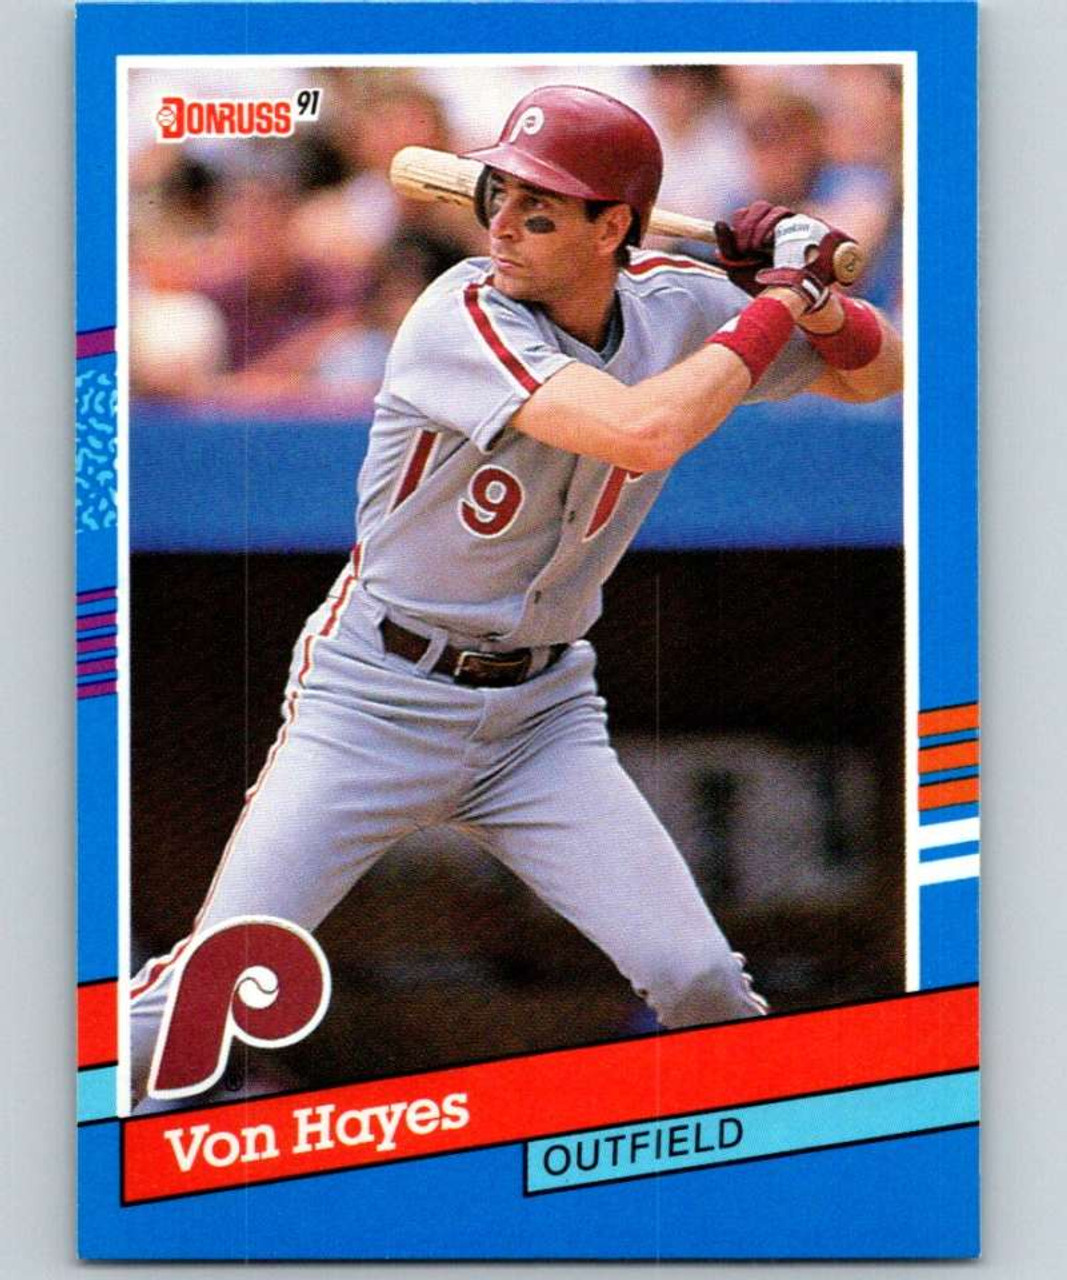 Von Hayes Signed 1992 Topps Baseball Card - Philadelphia Phillies